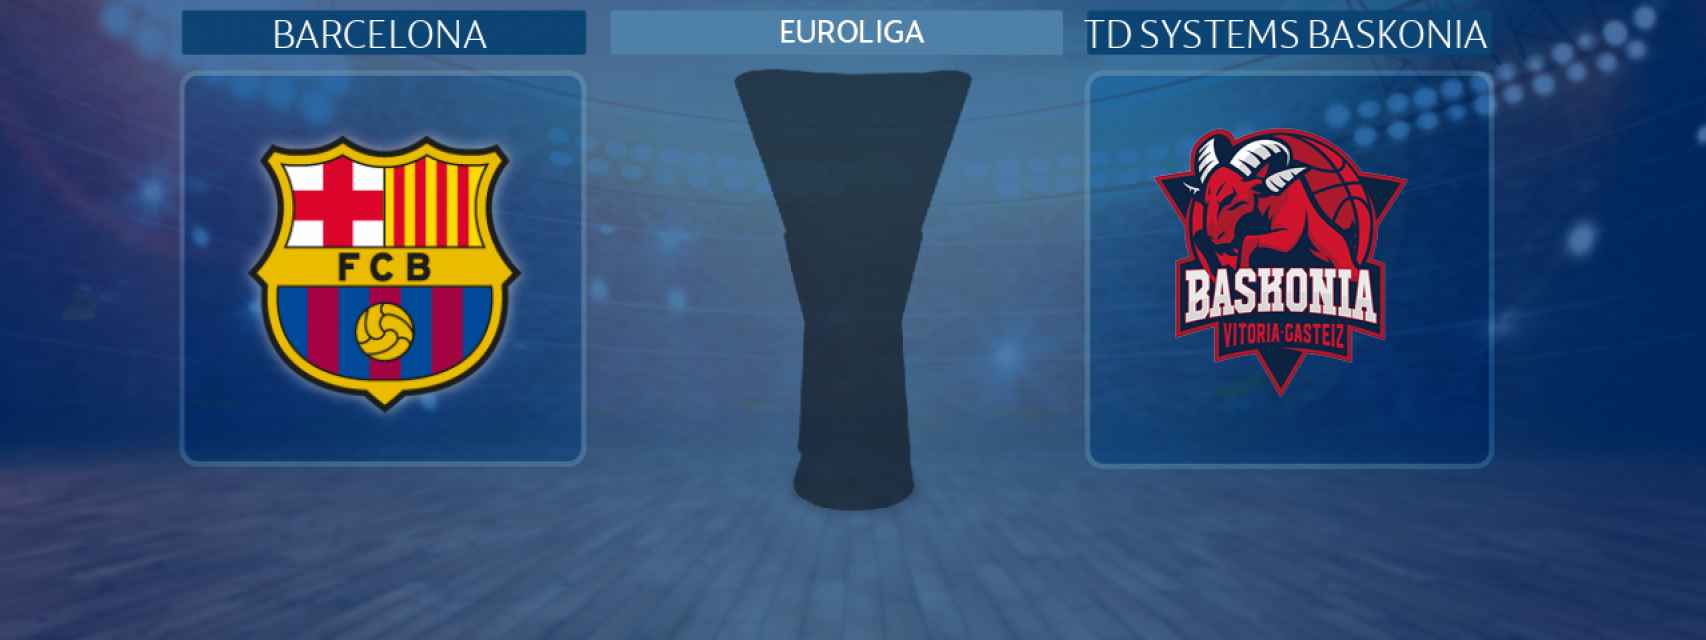 Barcelona - TD Systems Baskonia, partido de la Euroliga